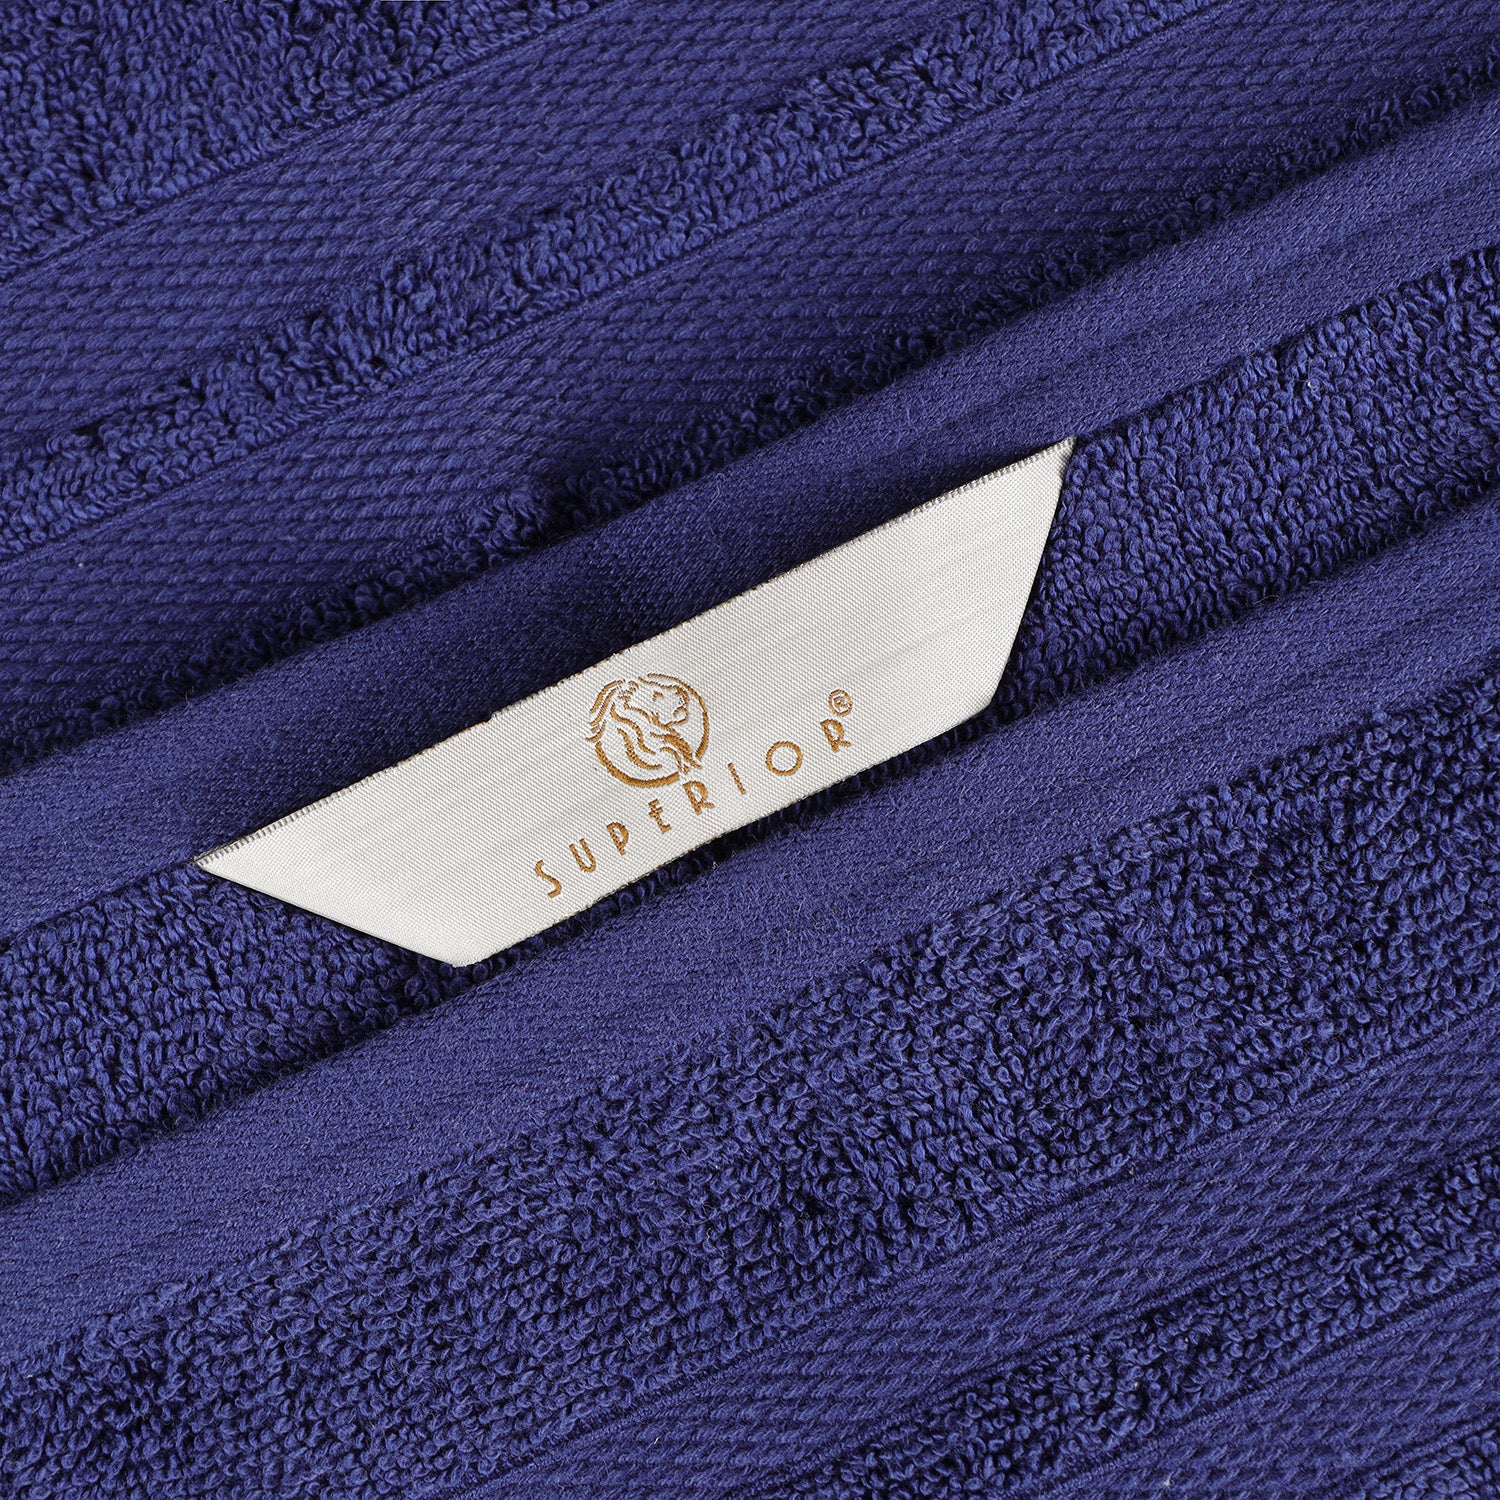 Superior Ultra Soft Cotton Absorbent Solid Bath Sheet (Set of 2) -  Navy Blue